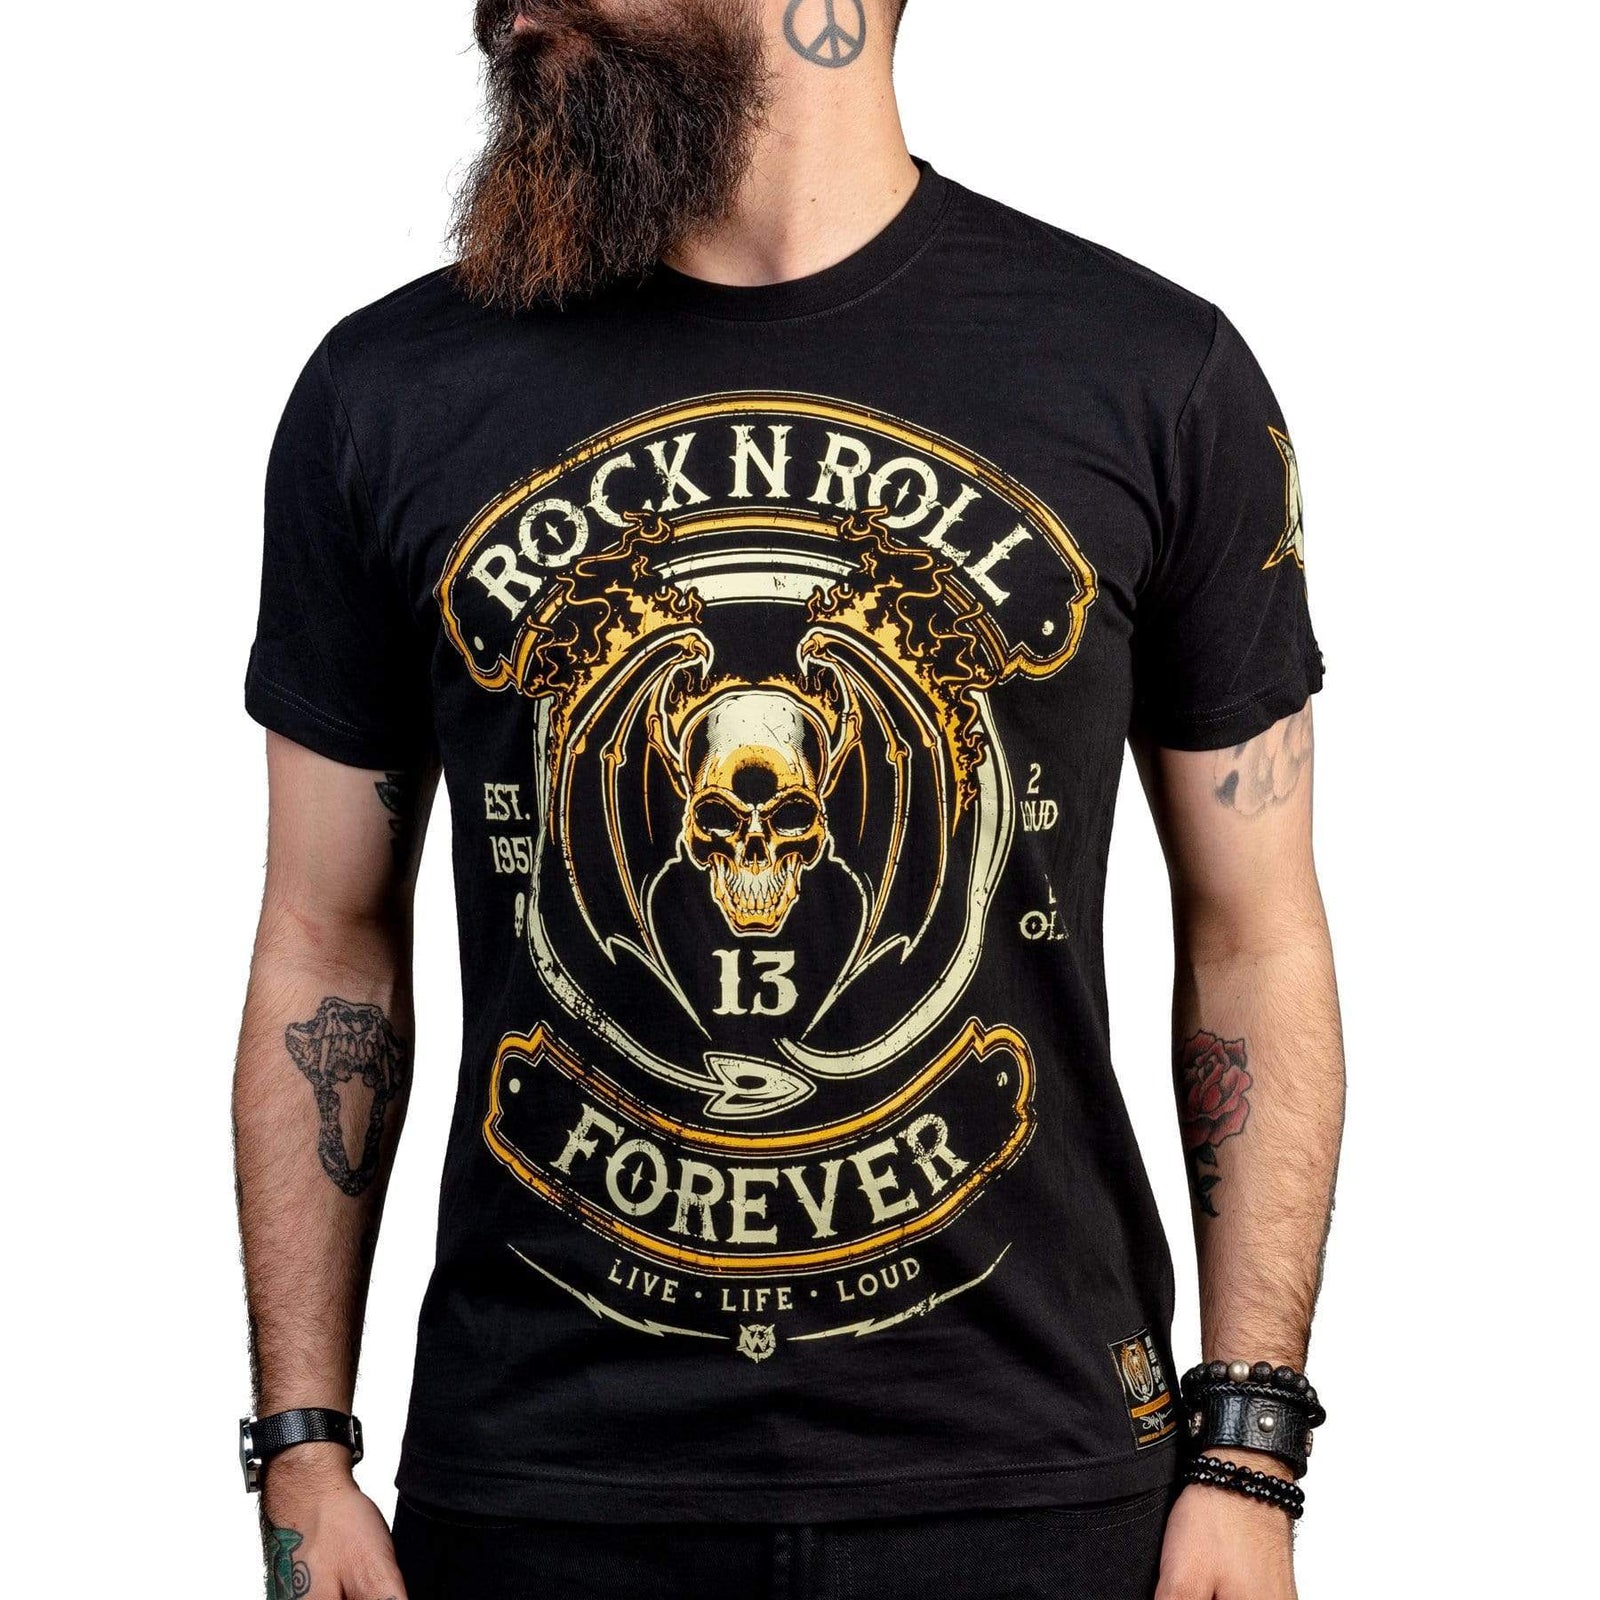 Artist Asylum Collection T-Shirt Rock N Roll Forever Tee